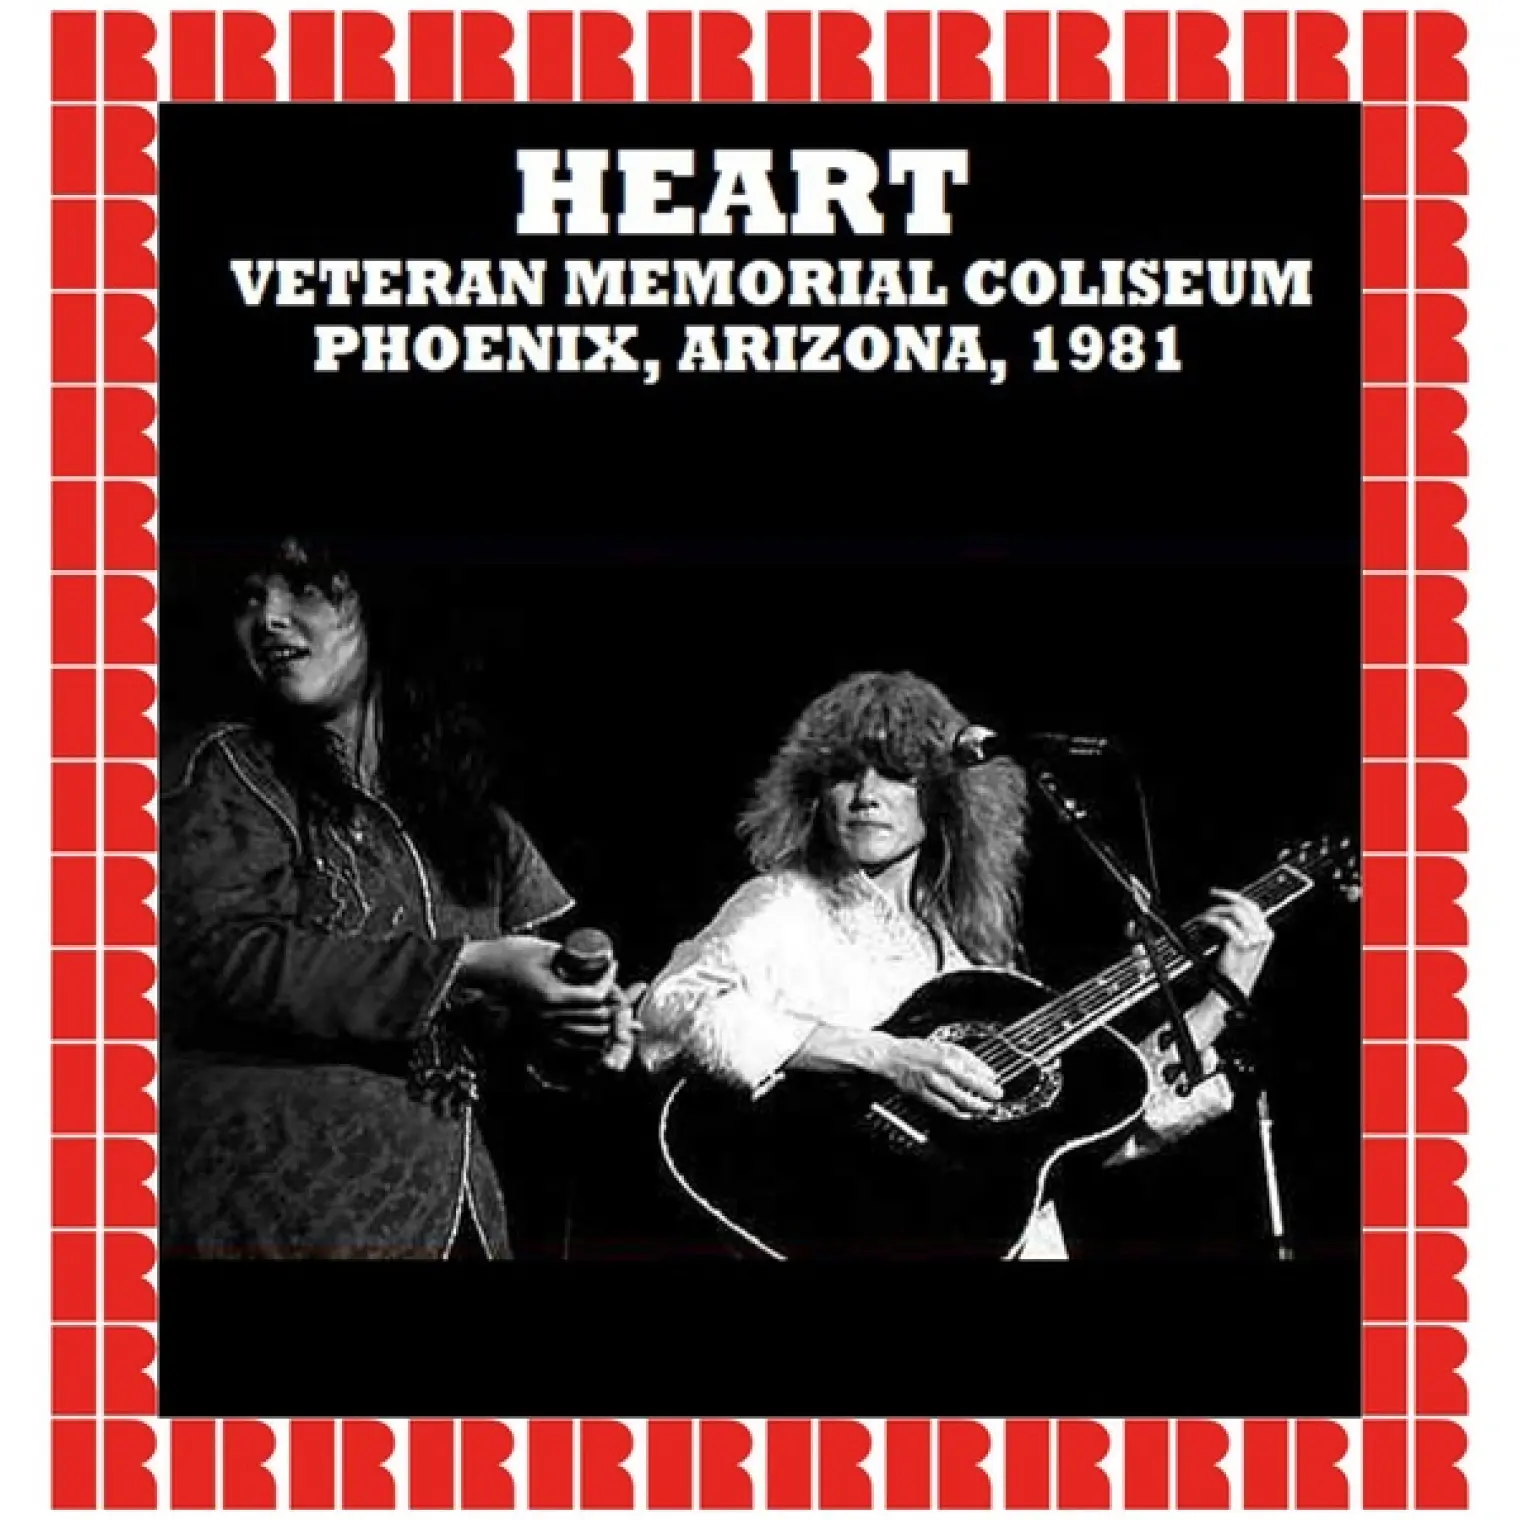 Veterans Memorial Coliseum Phoenix, Arizona, USA 1981 (Hd Remastered Edition) -  Heart 